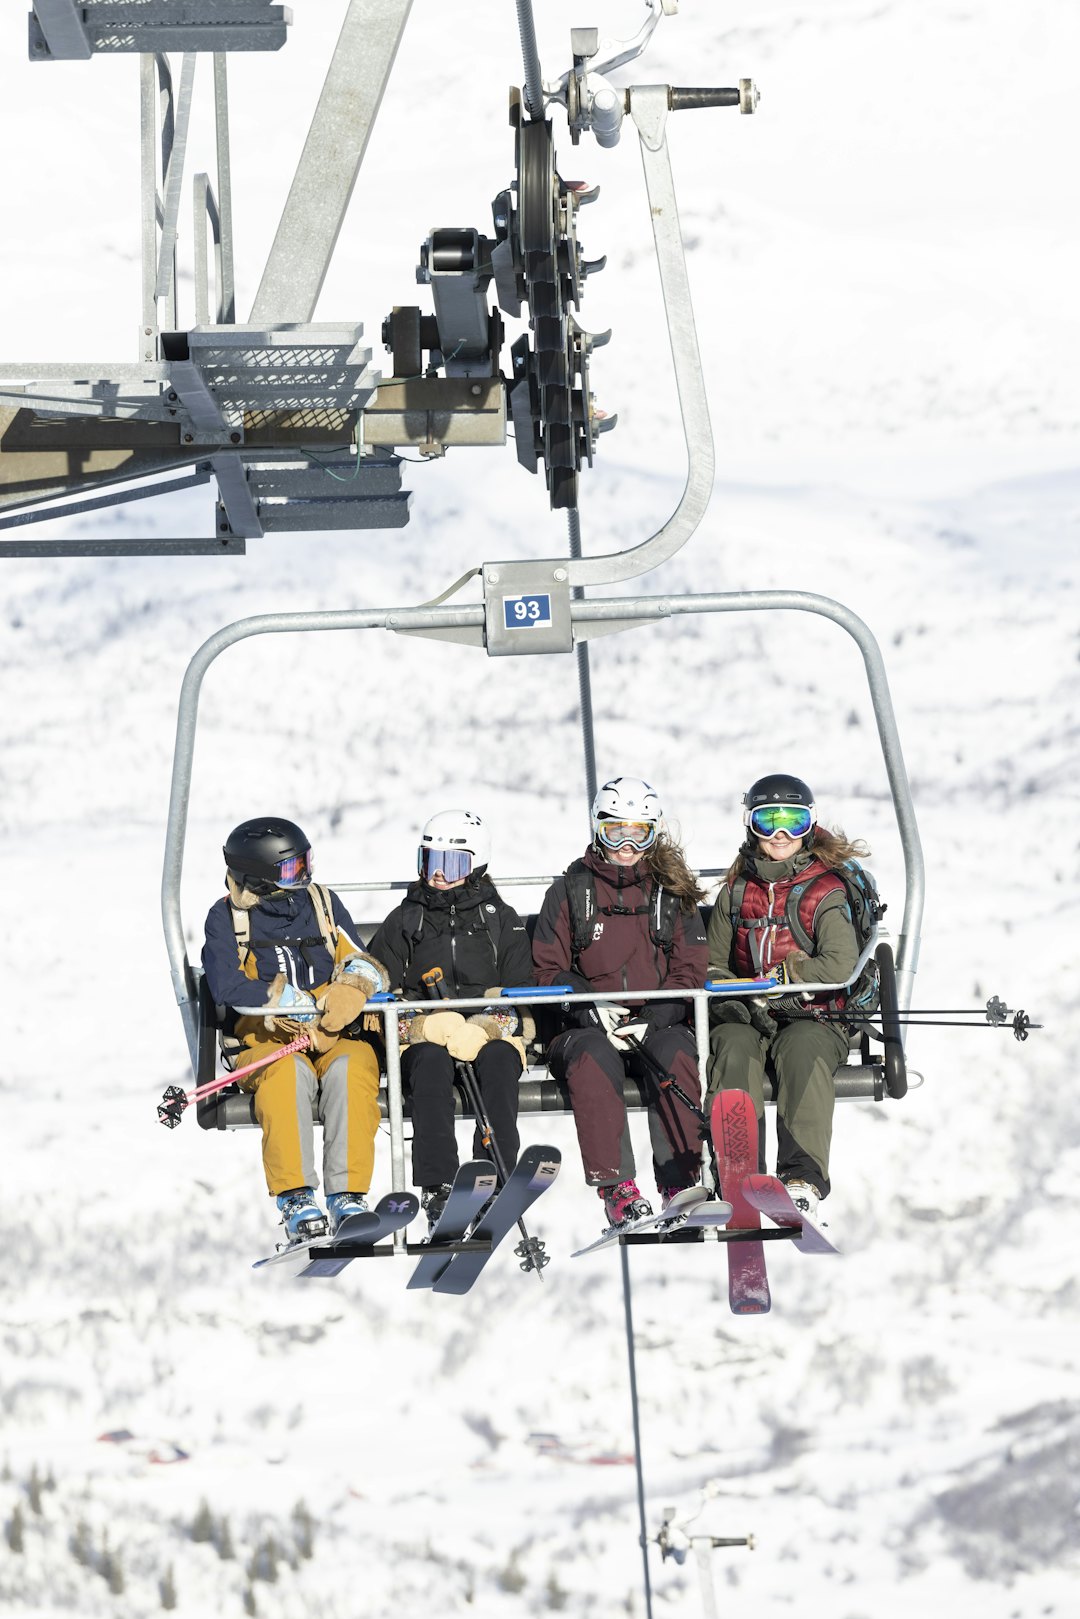 TESTLAG: Fra skitesten i Hemsedal. Foto: Kalle Hägglund